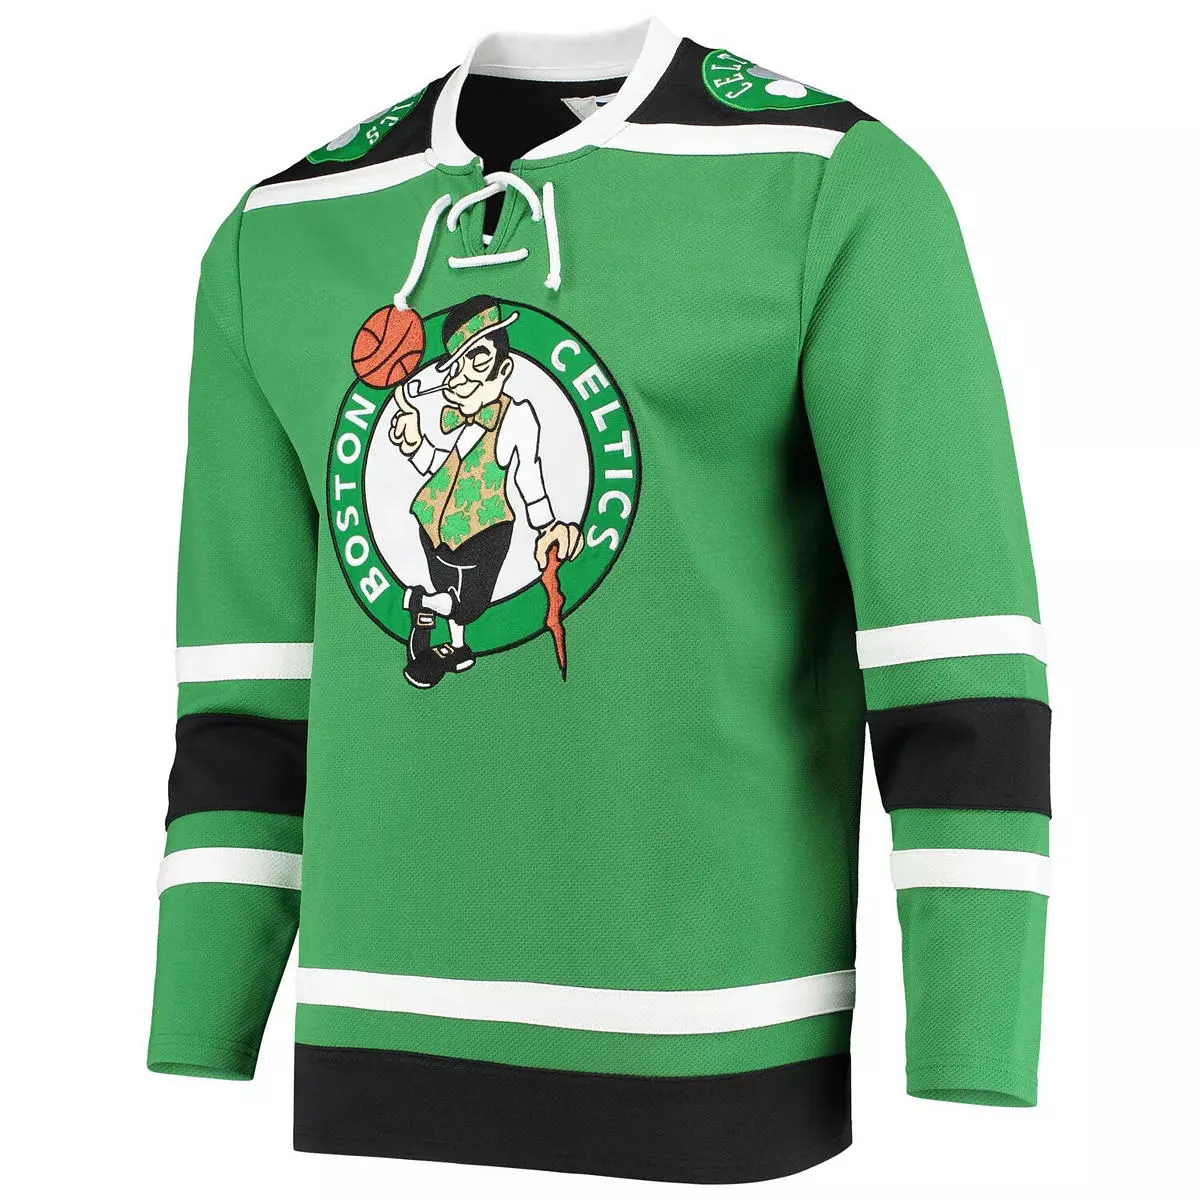 New Green sublimation custom ice hockey team jerseys